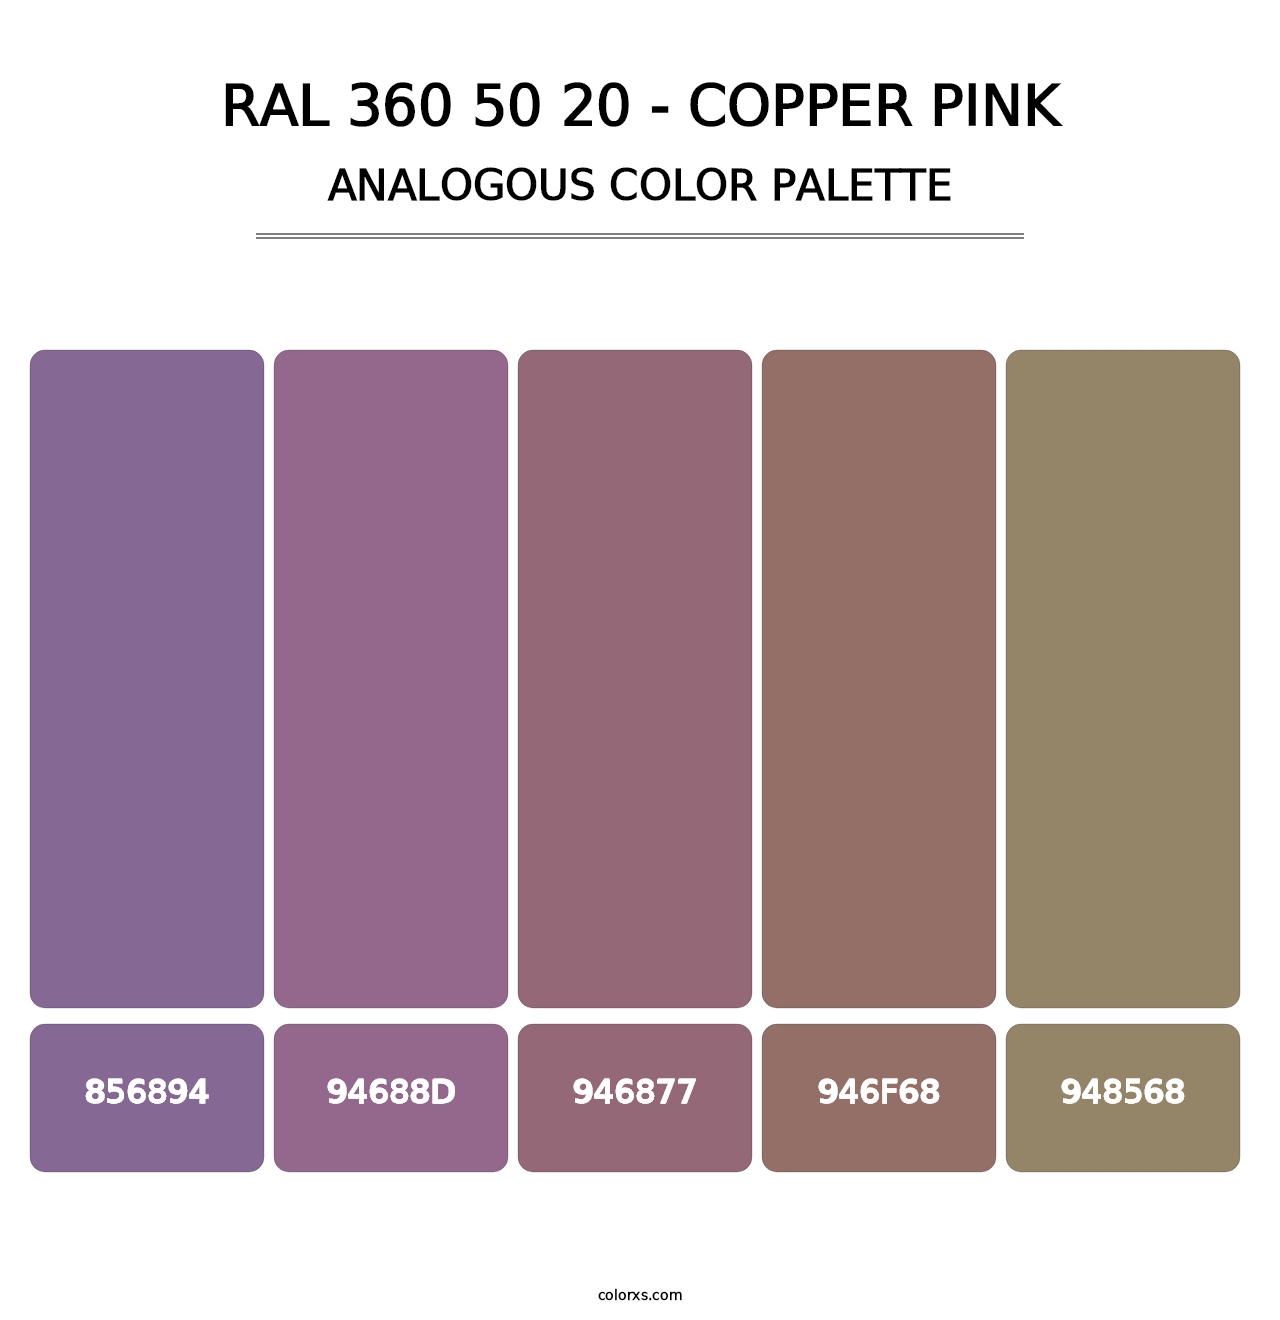 RAL 360 50 20 - Copper Pink - Analogous Color Palette